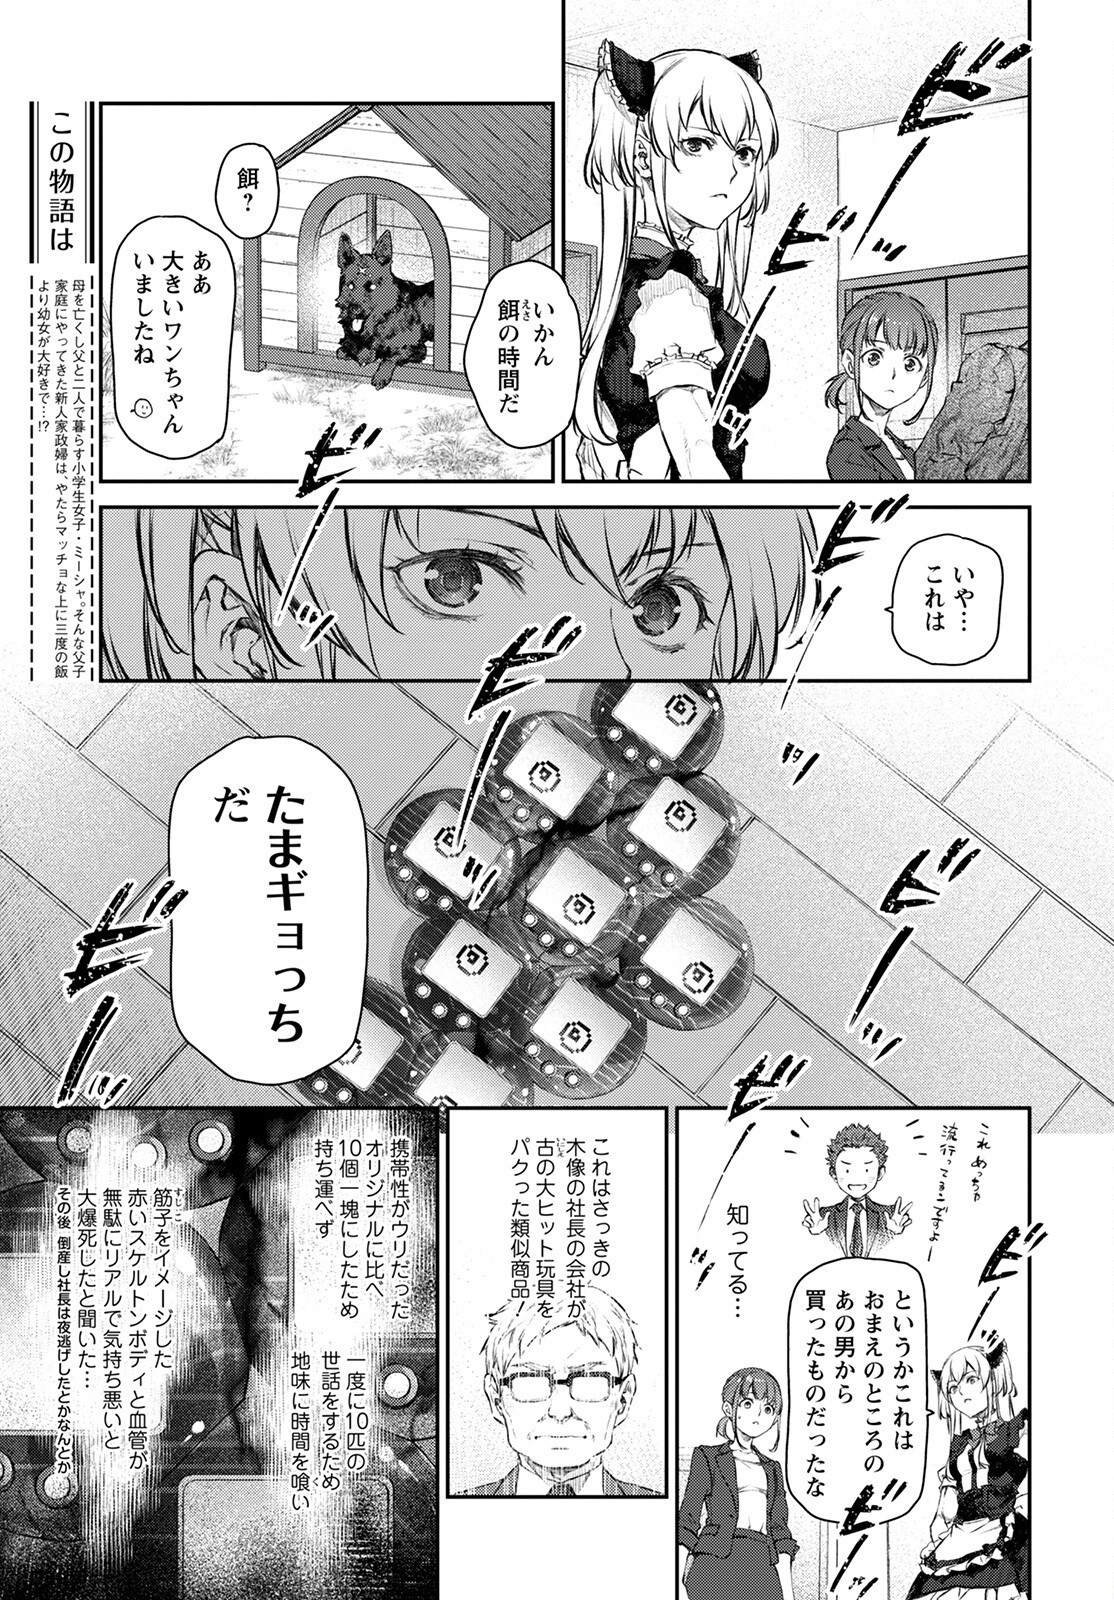 Uchi no Maid ga Uzasugiru! - Chapter 54 - Page 3